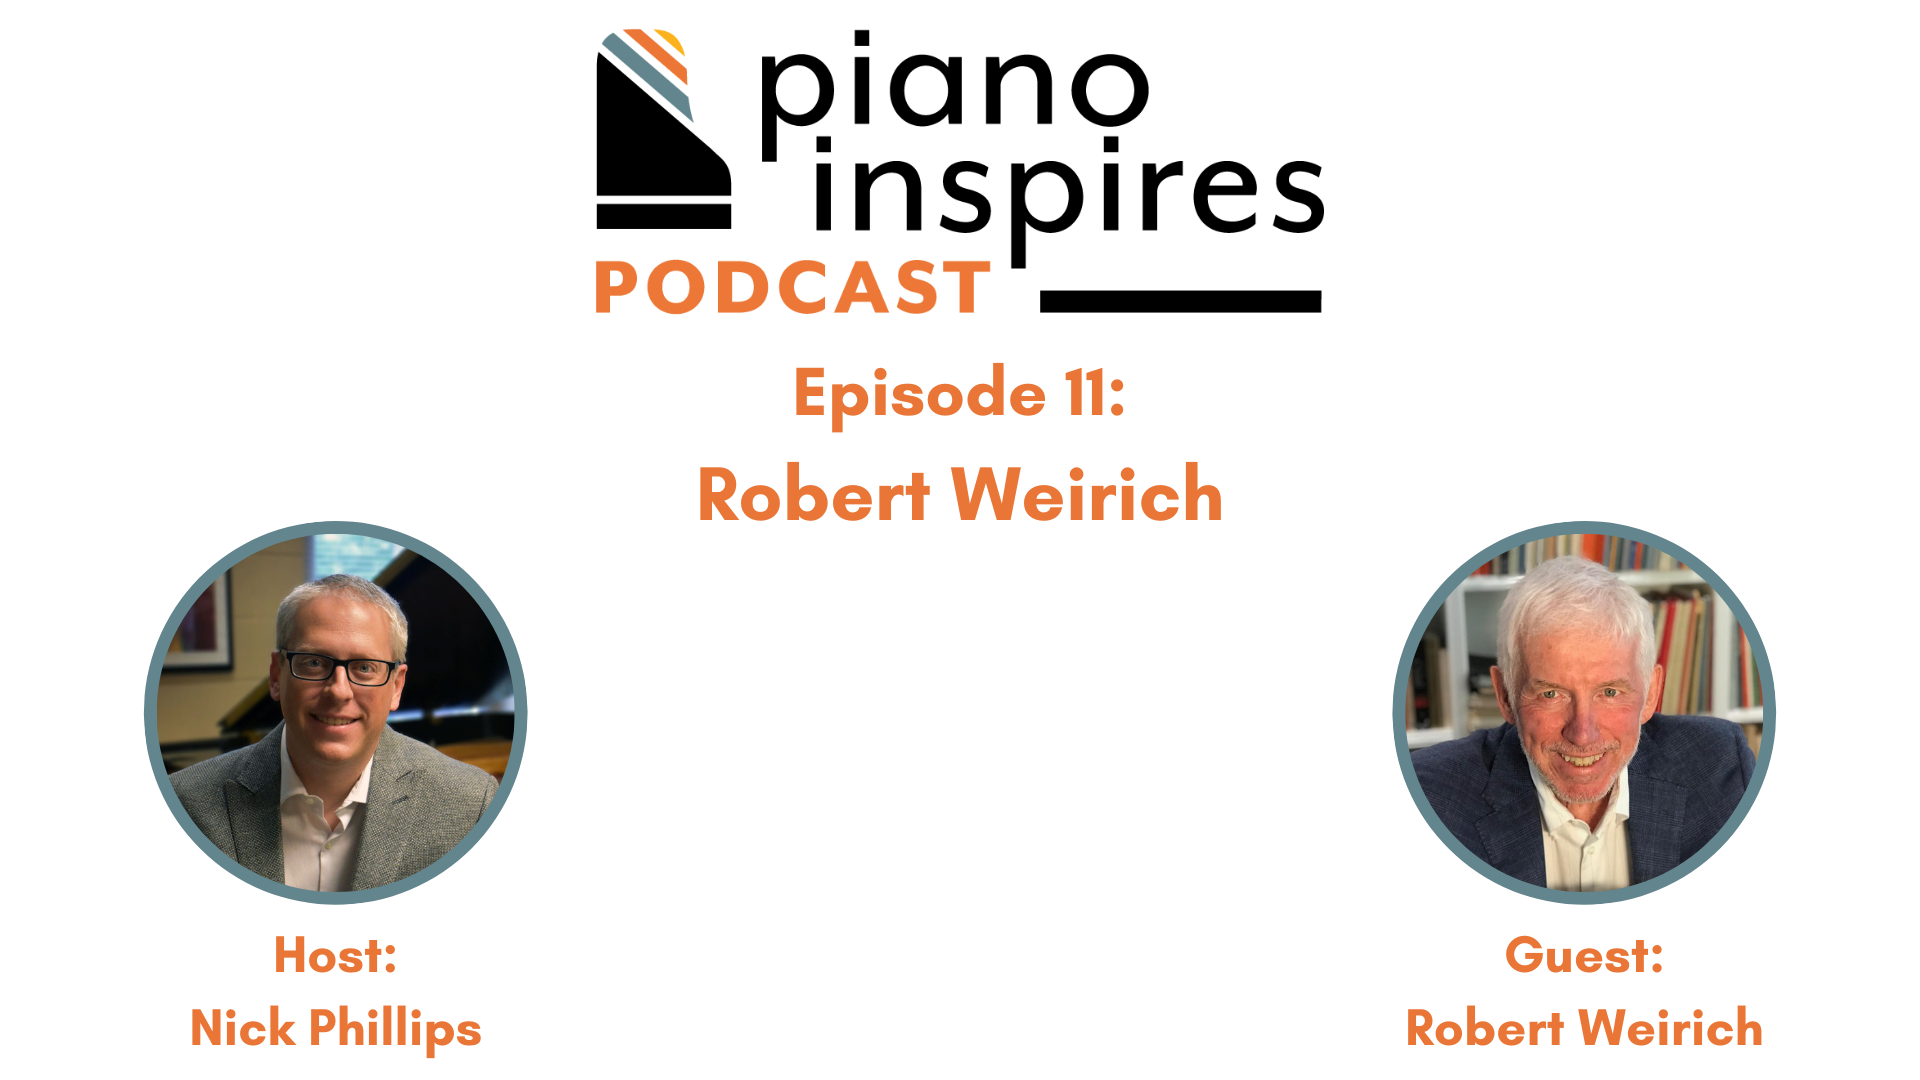 Episode 11: Robert Weirich, Pianist, Educator, and Author